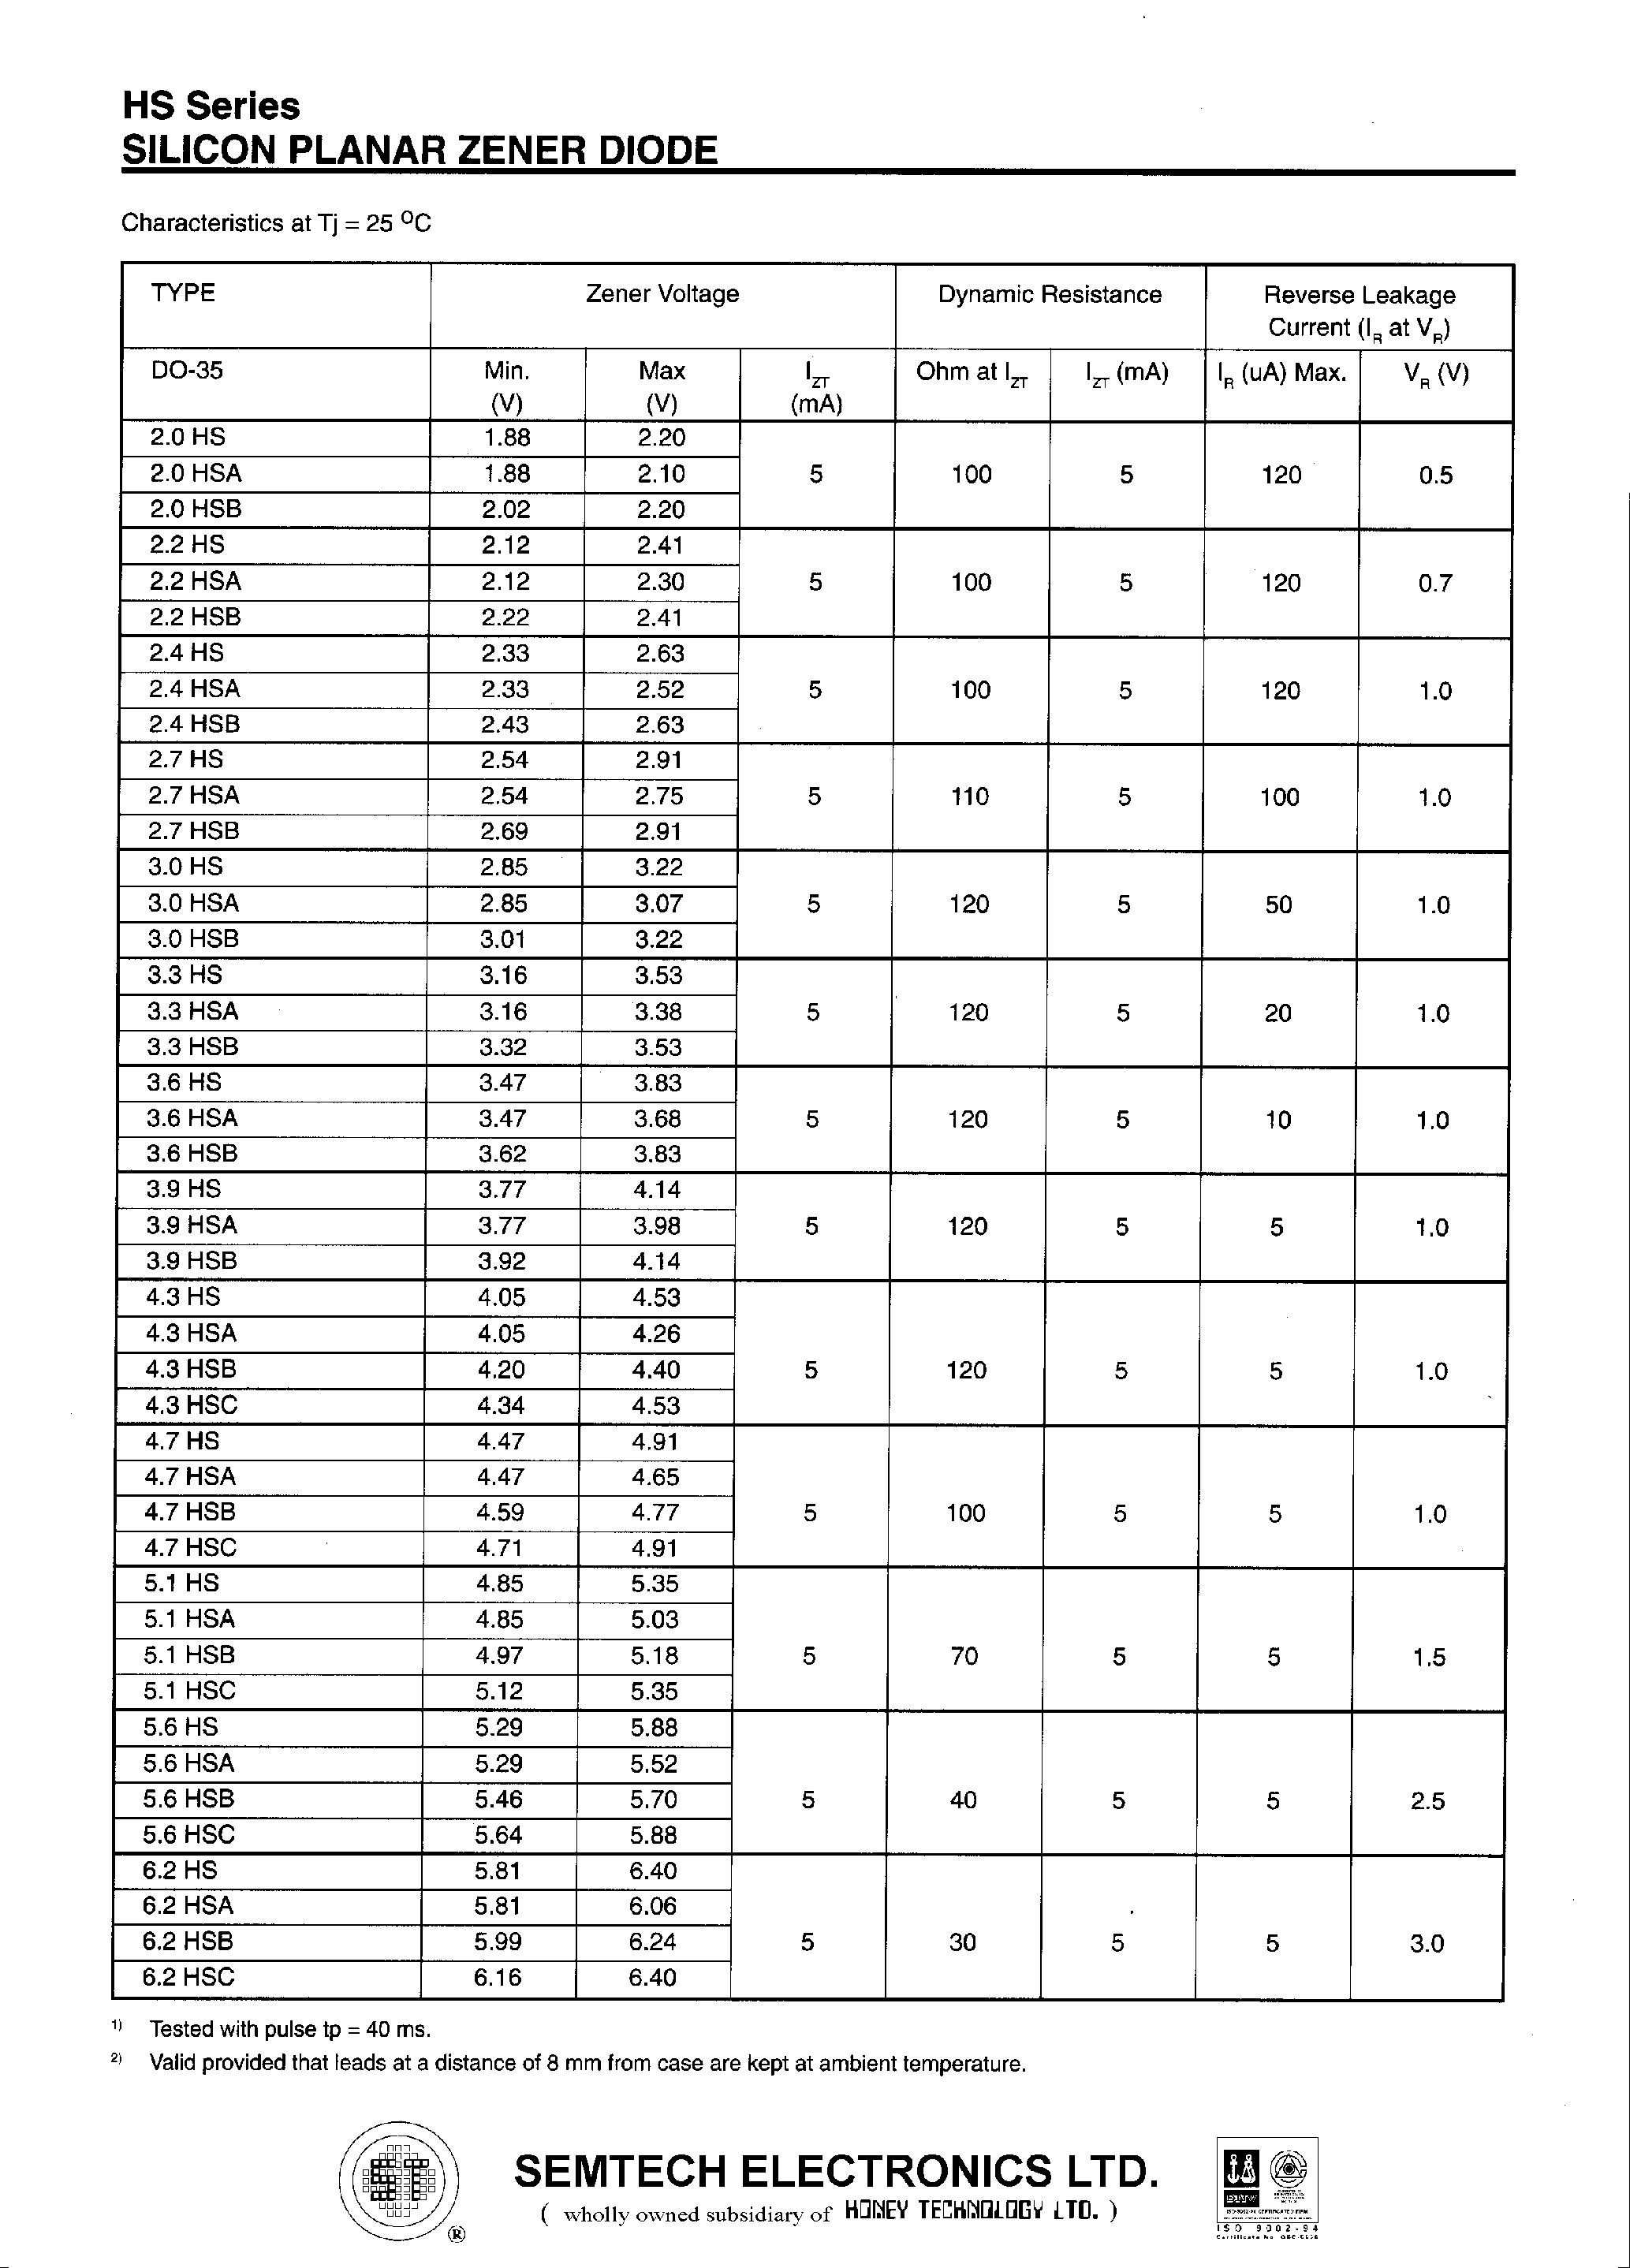 Datasheet 5.1HSC - SILICON PLANAR ZENER DIODE page 2